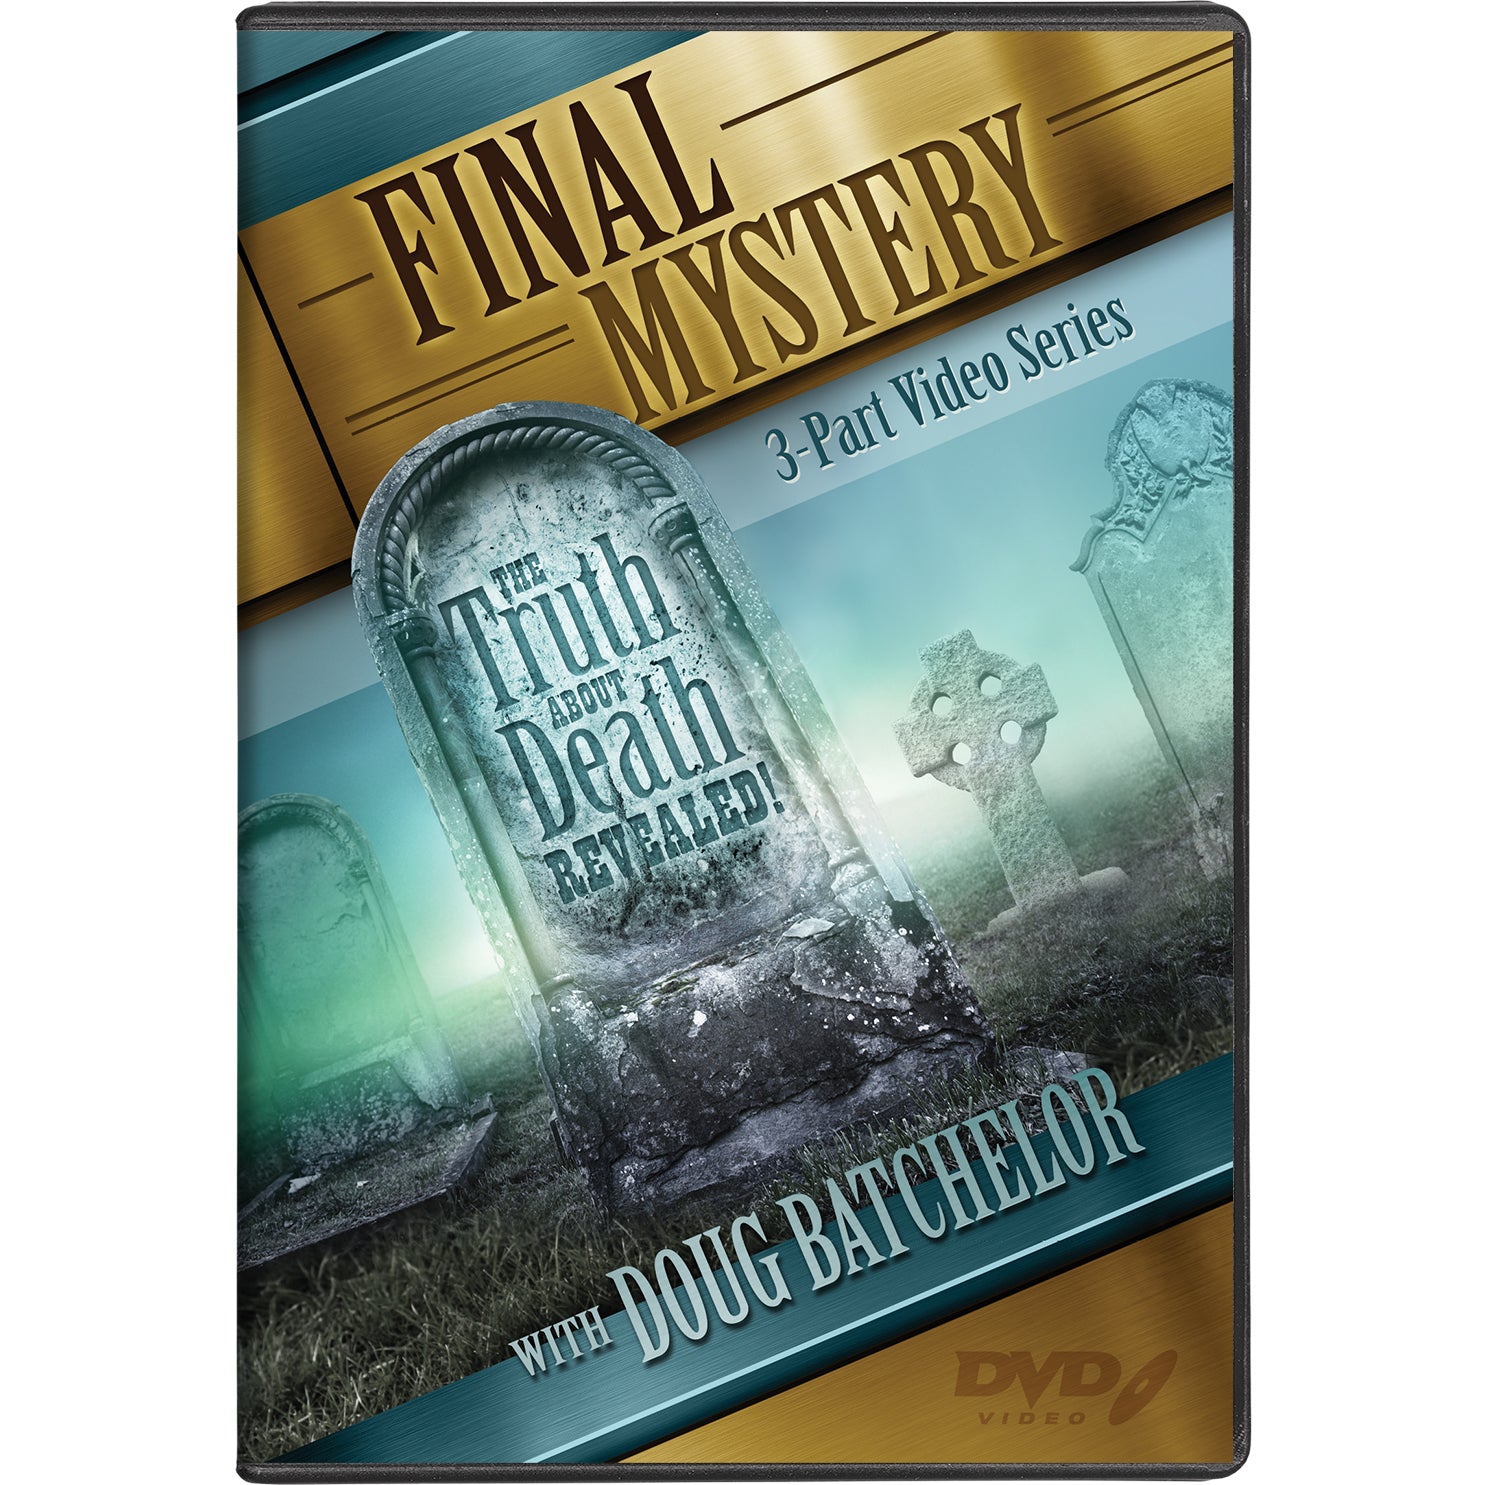 Final Mystery: 3 Part Video Series by Doug Batchelor